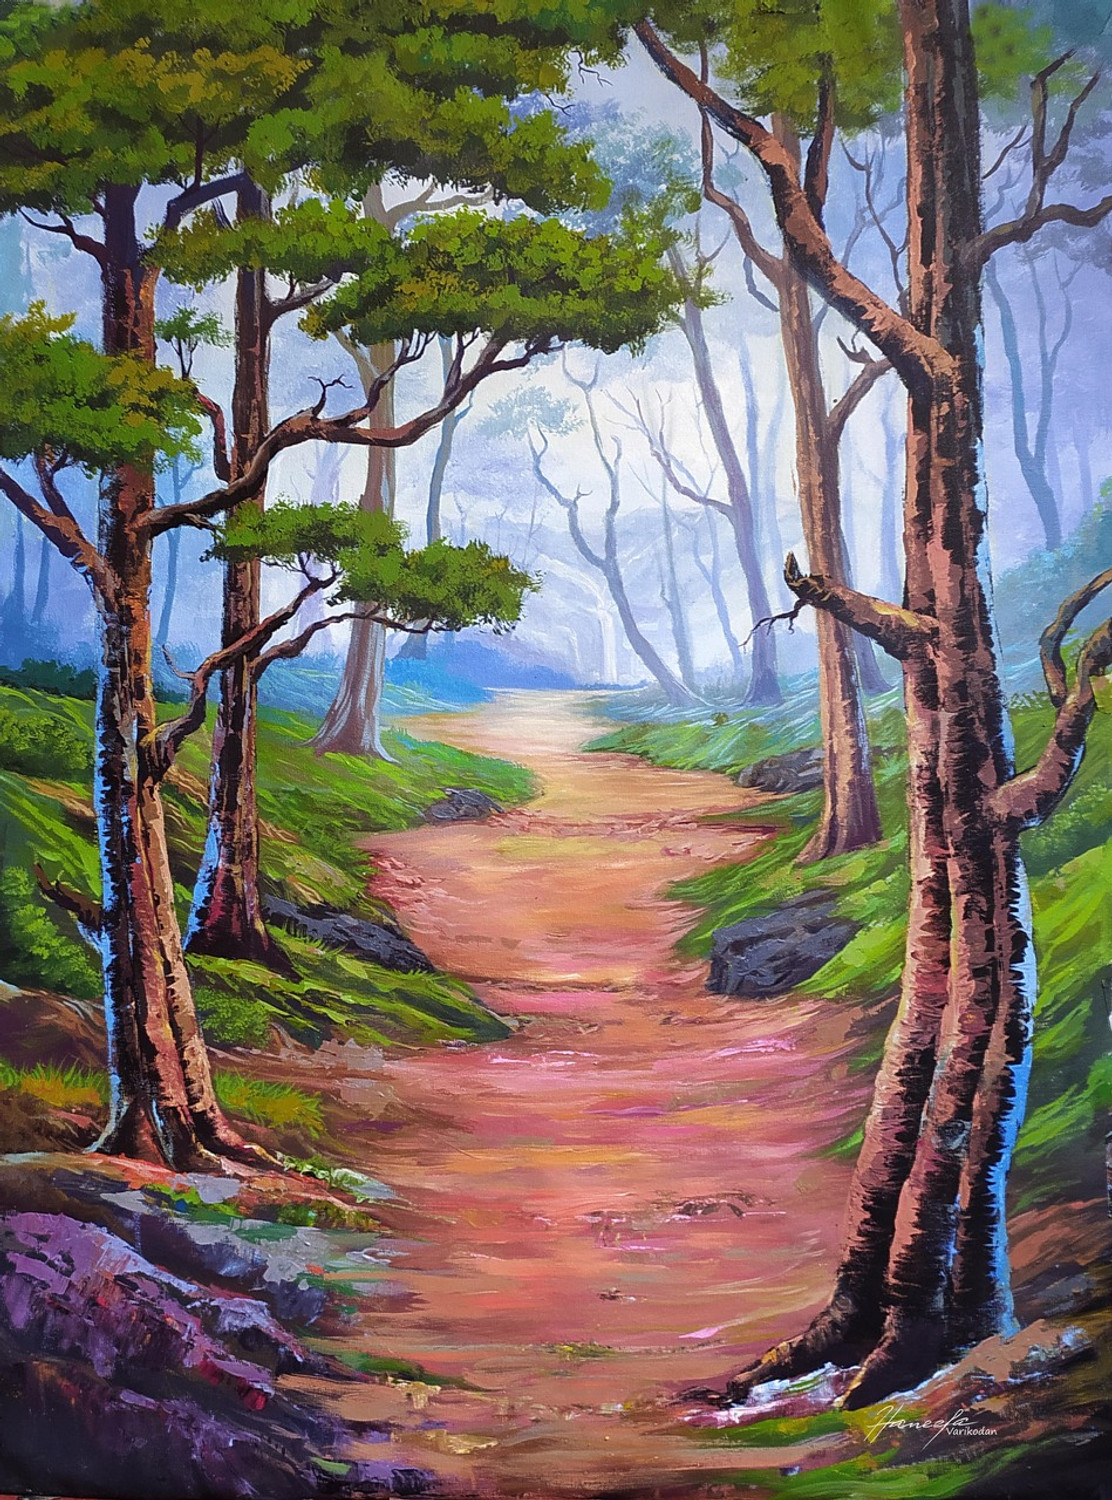 Buy Pathway of Nature Handmade Painting by MUHAMMAD HANEEPHA. Code